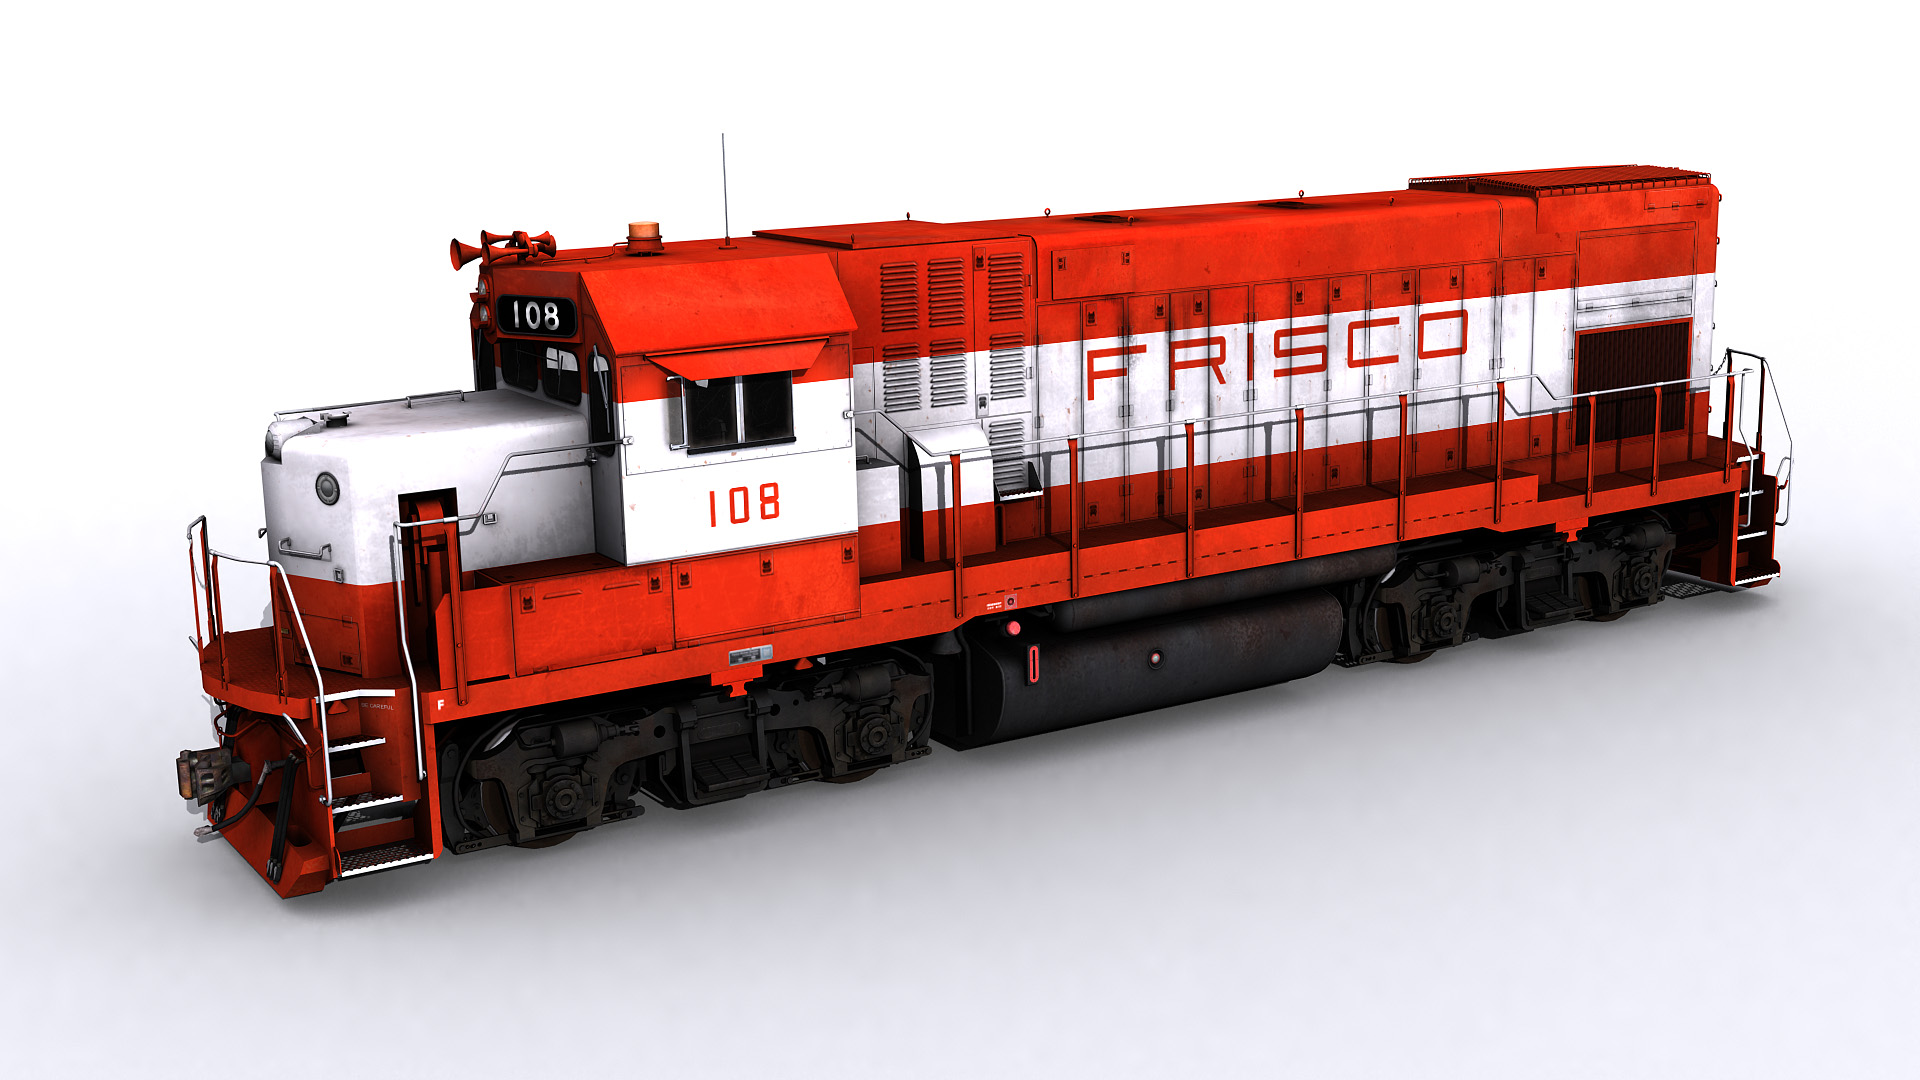 Slsf zero one a red colour rail engine